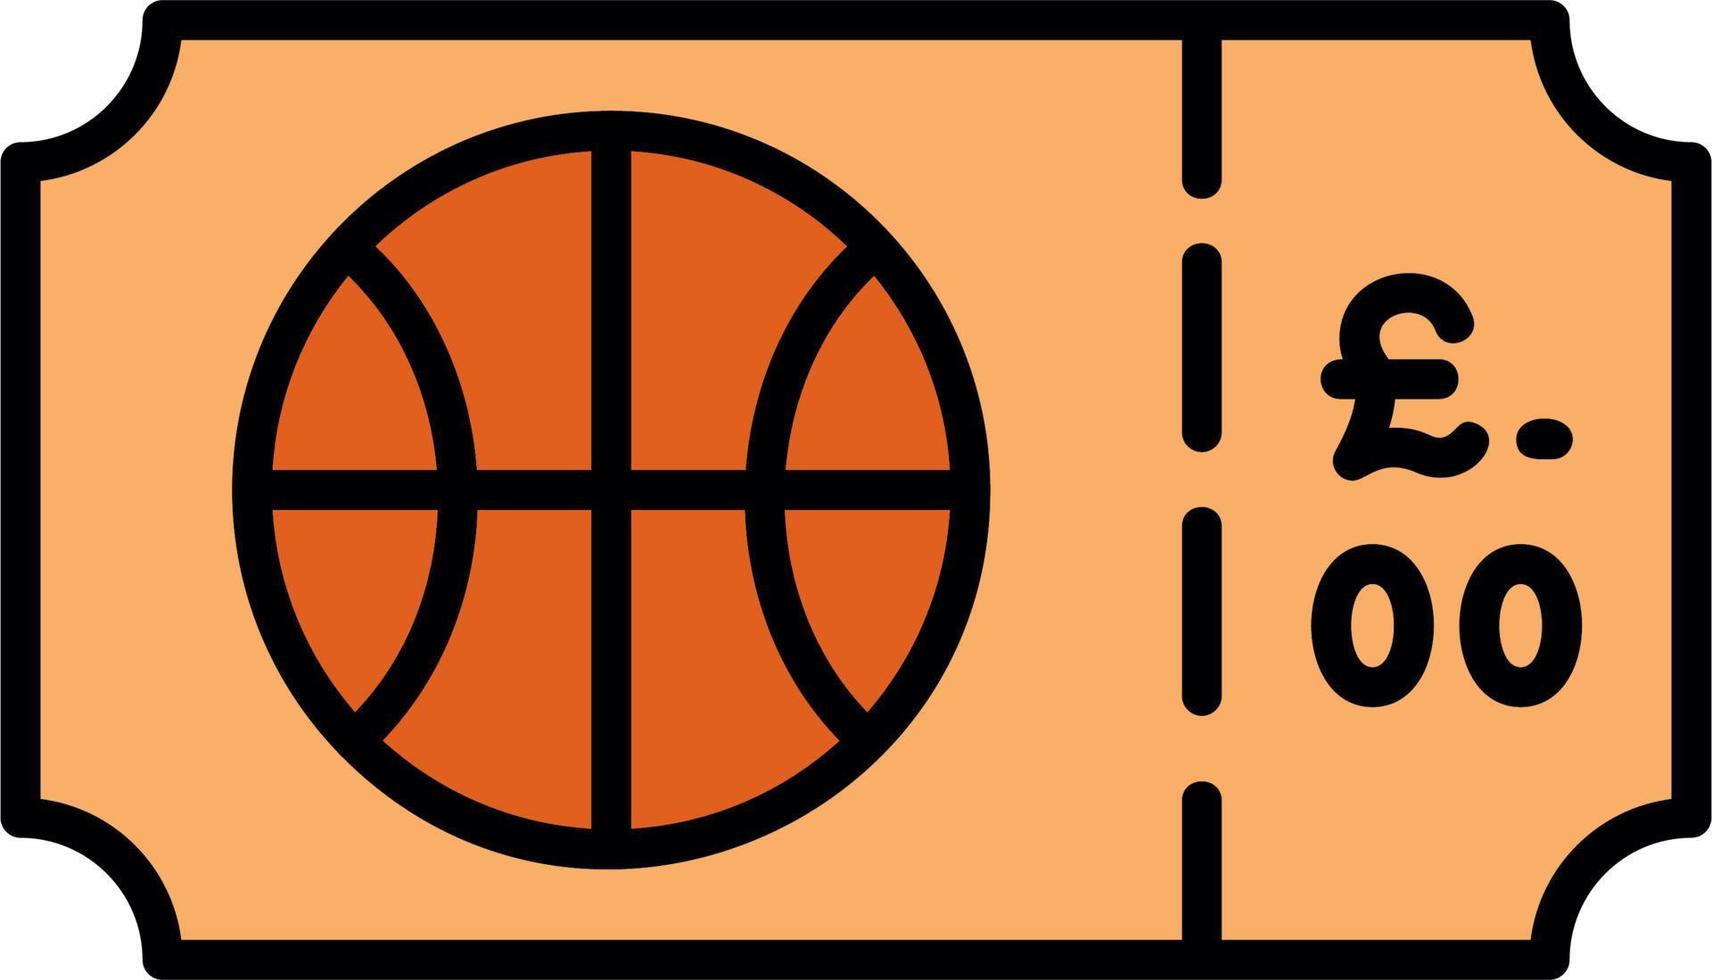 basketbal ticket vector icoon